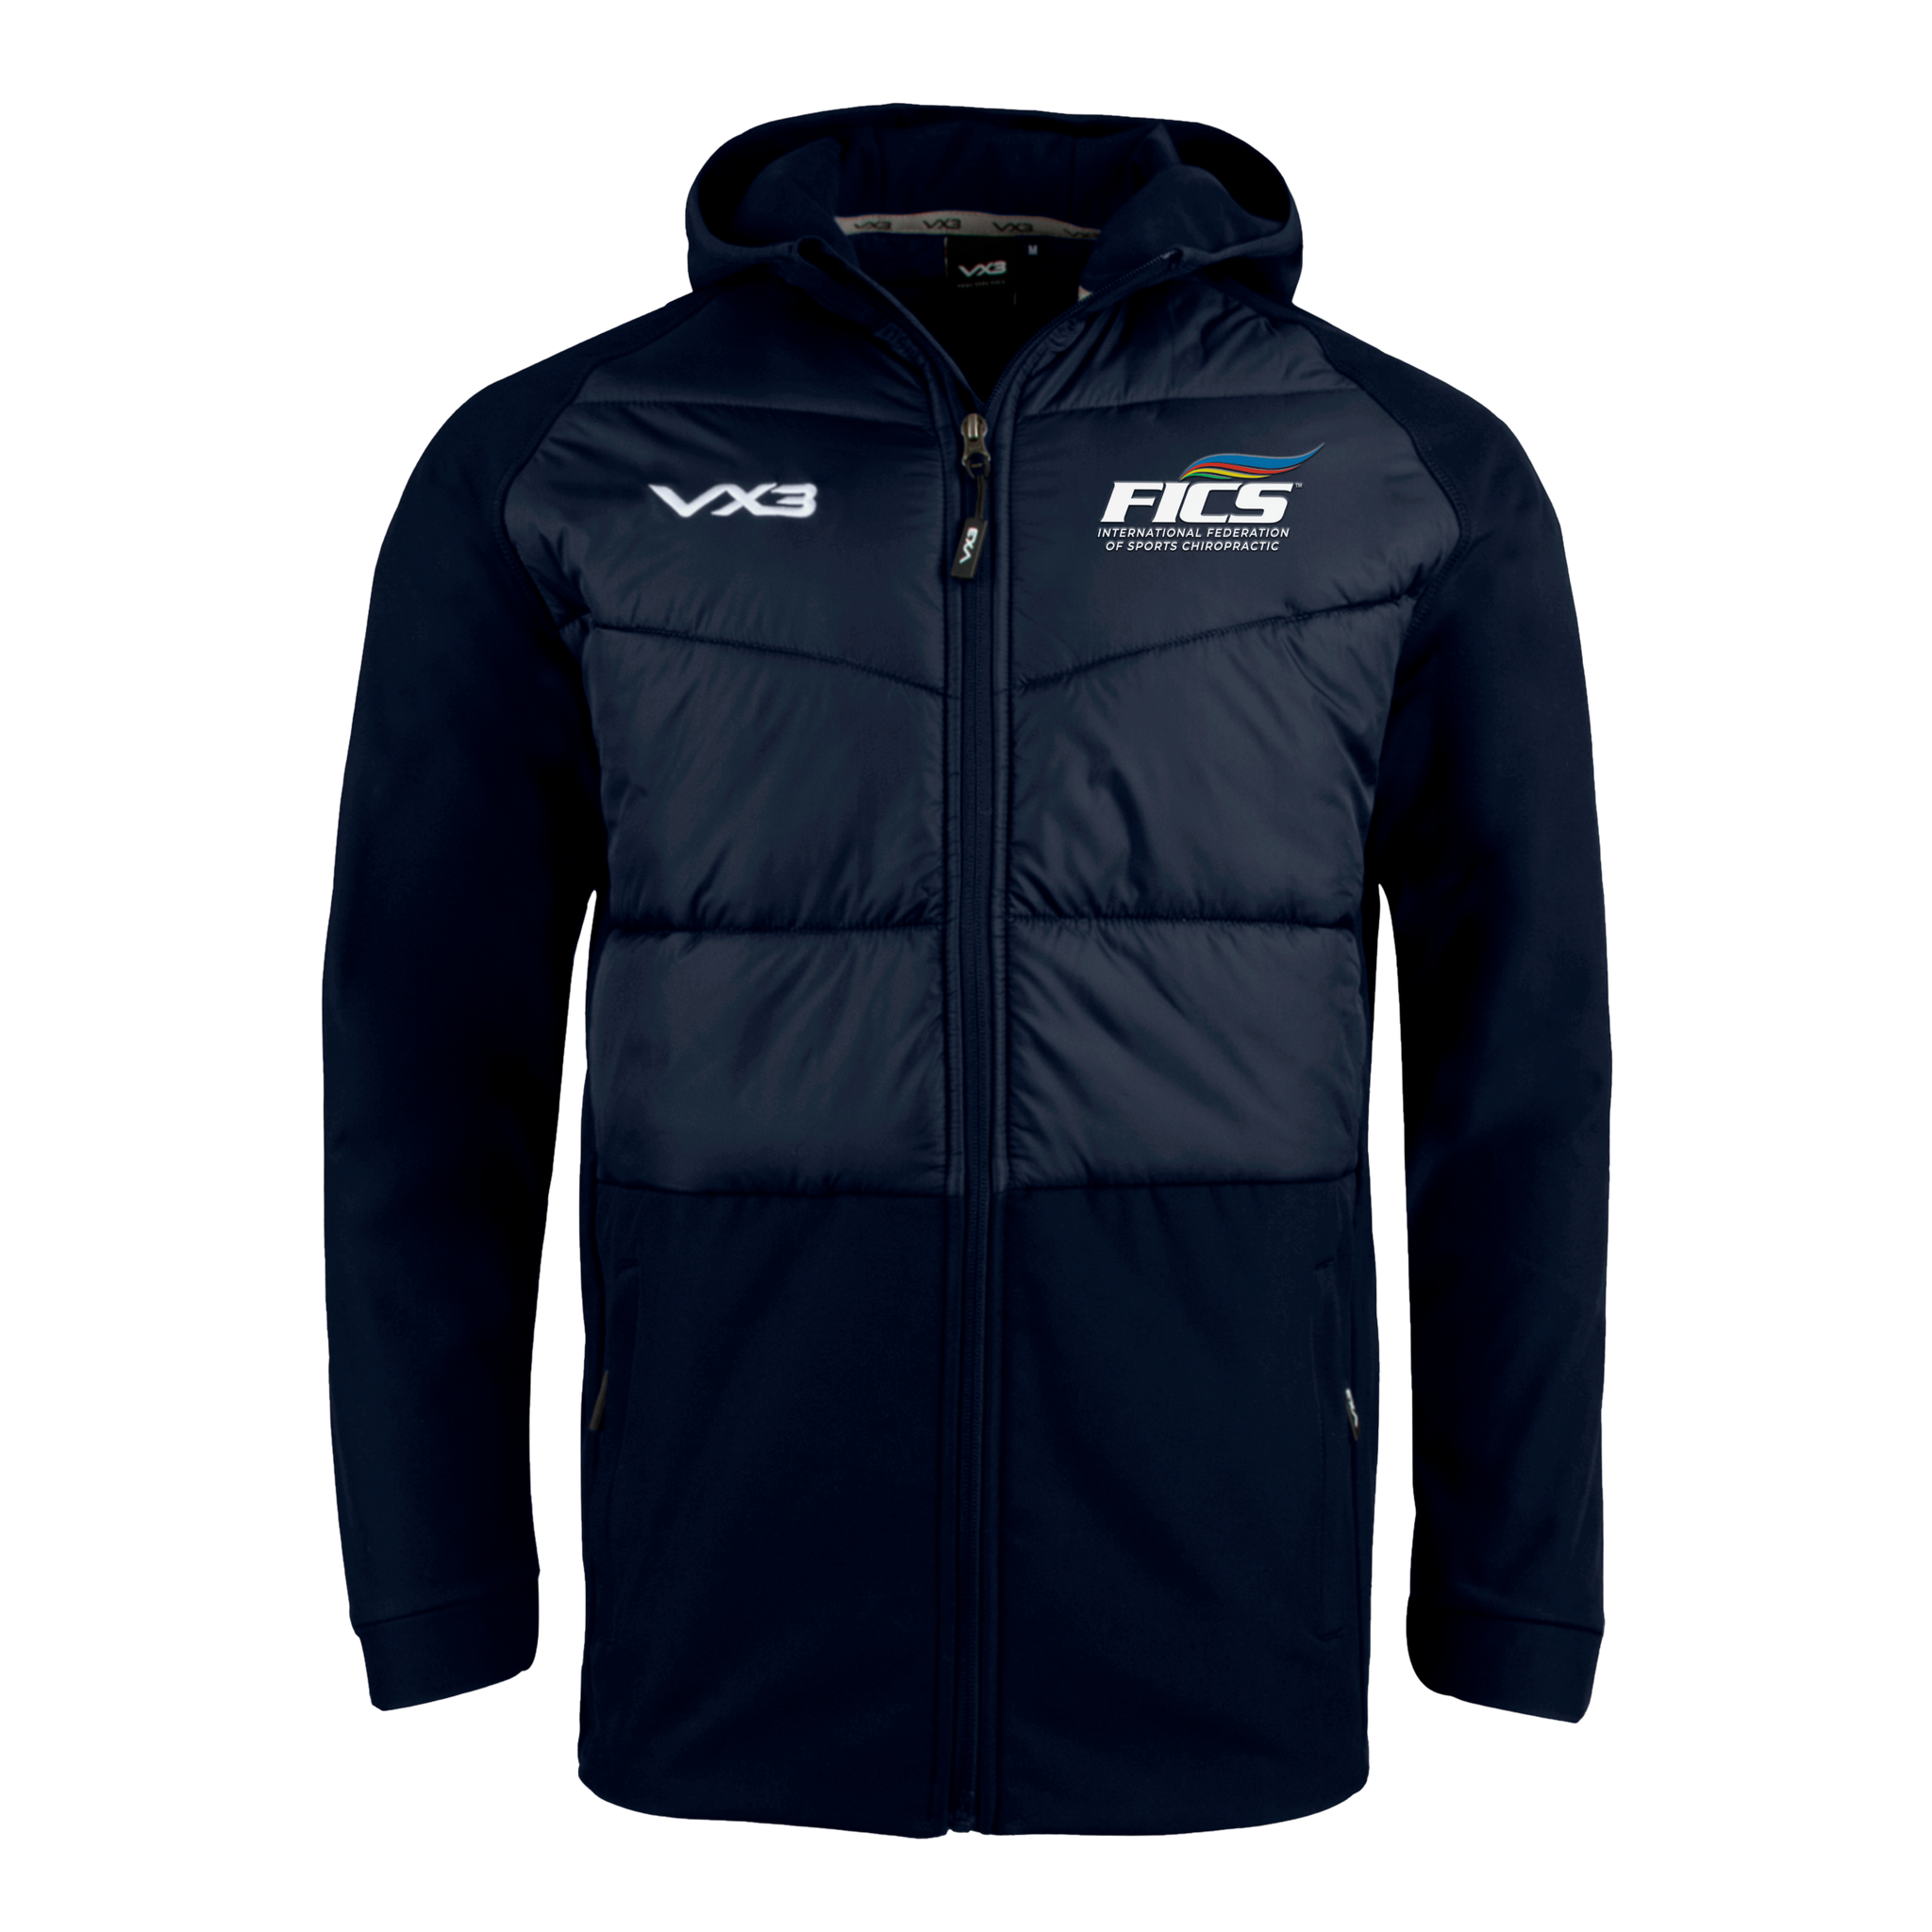 FICS- International Federation Of Sports Chiropractic Tempest Hybrid Jacket